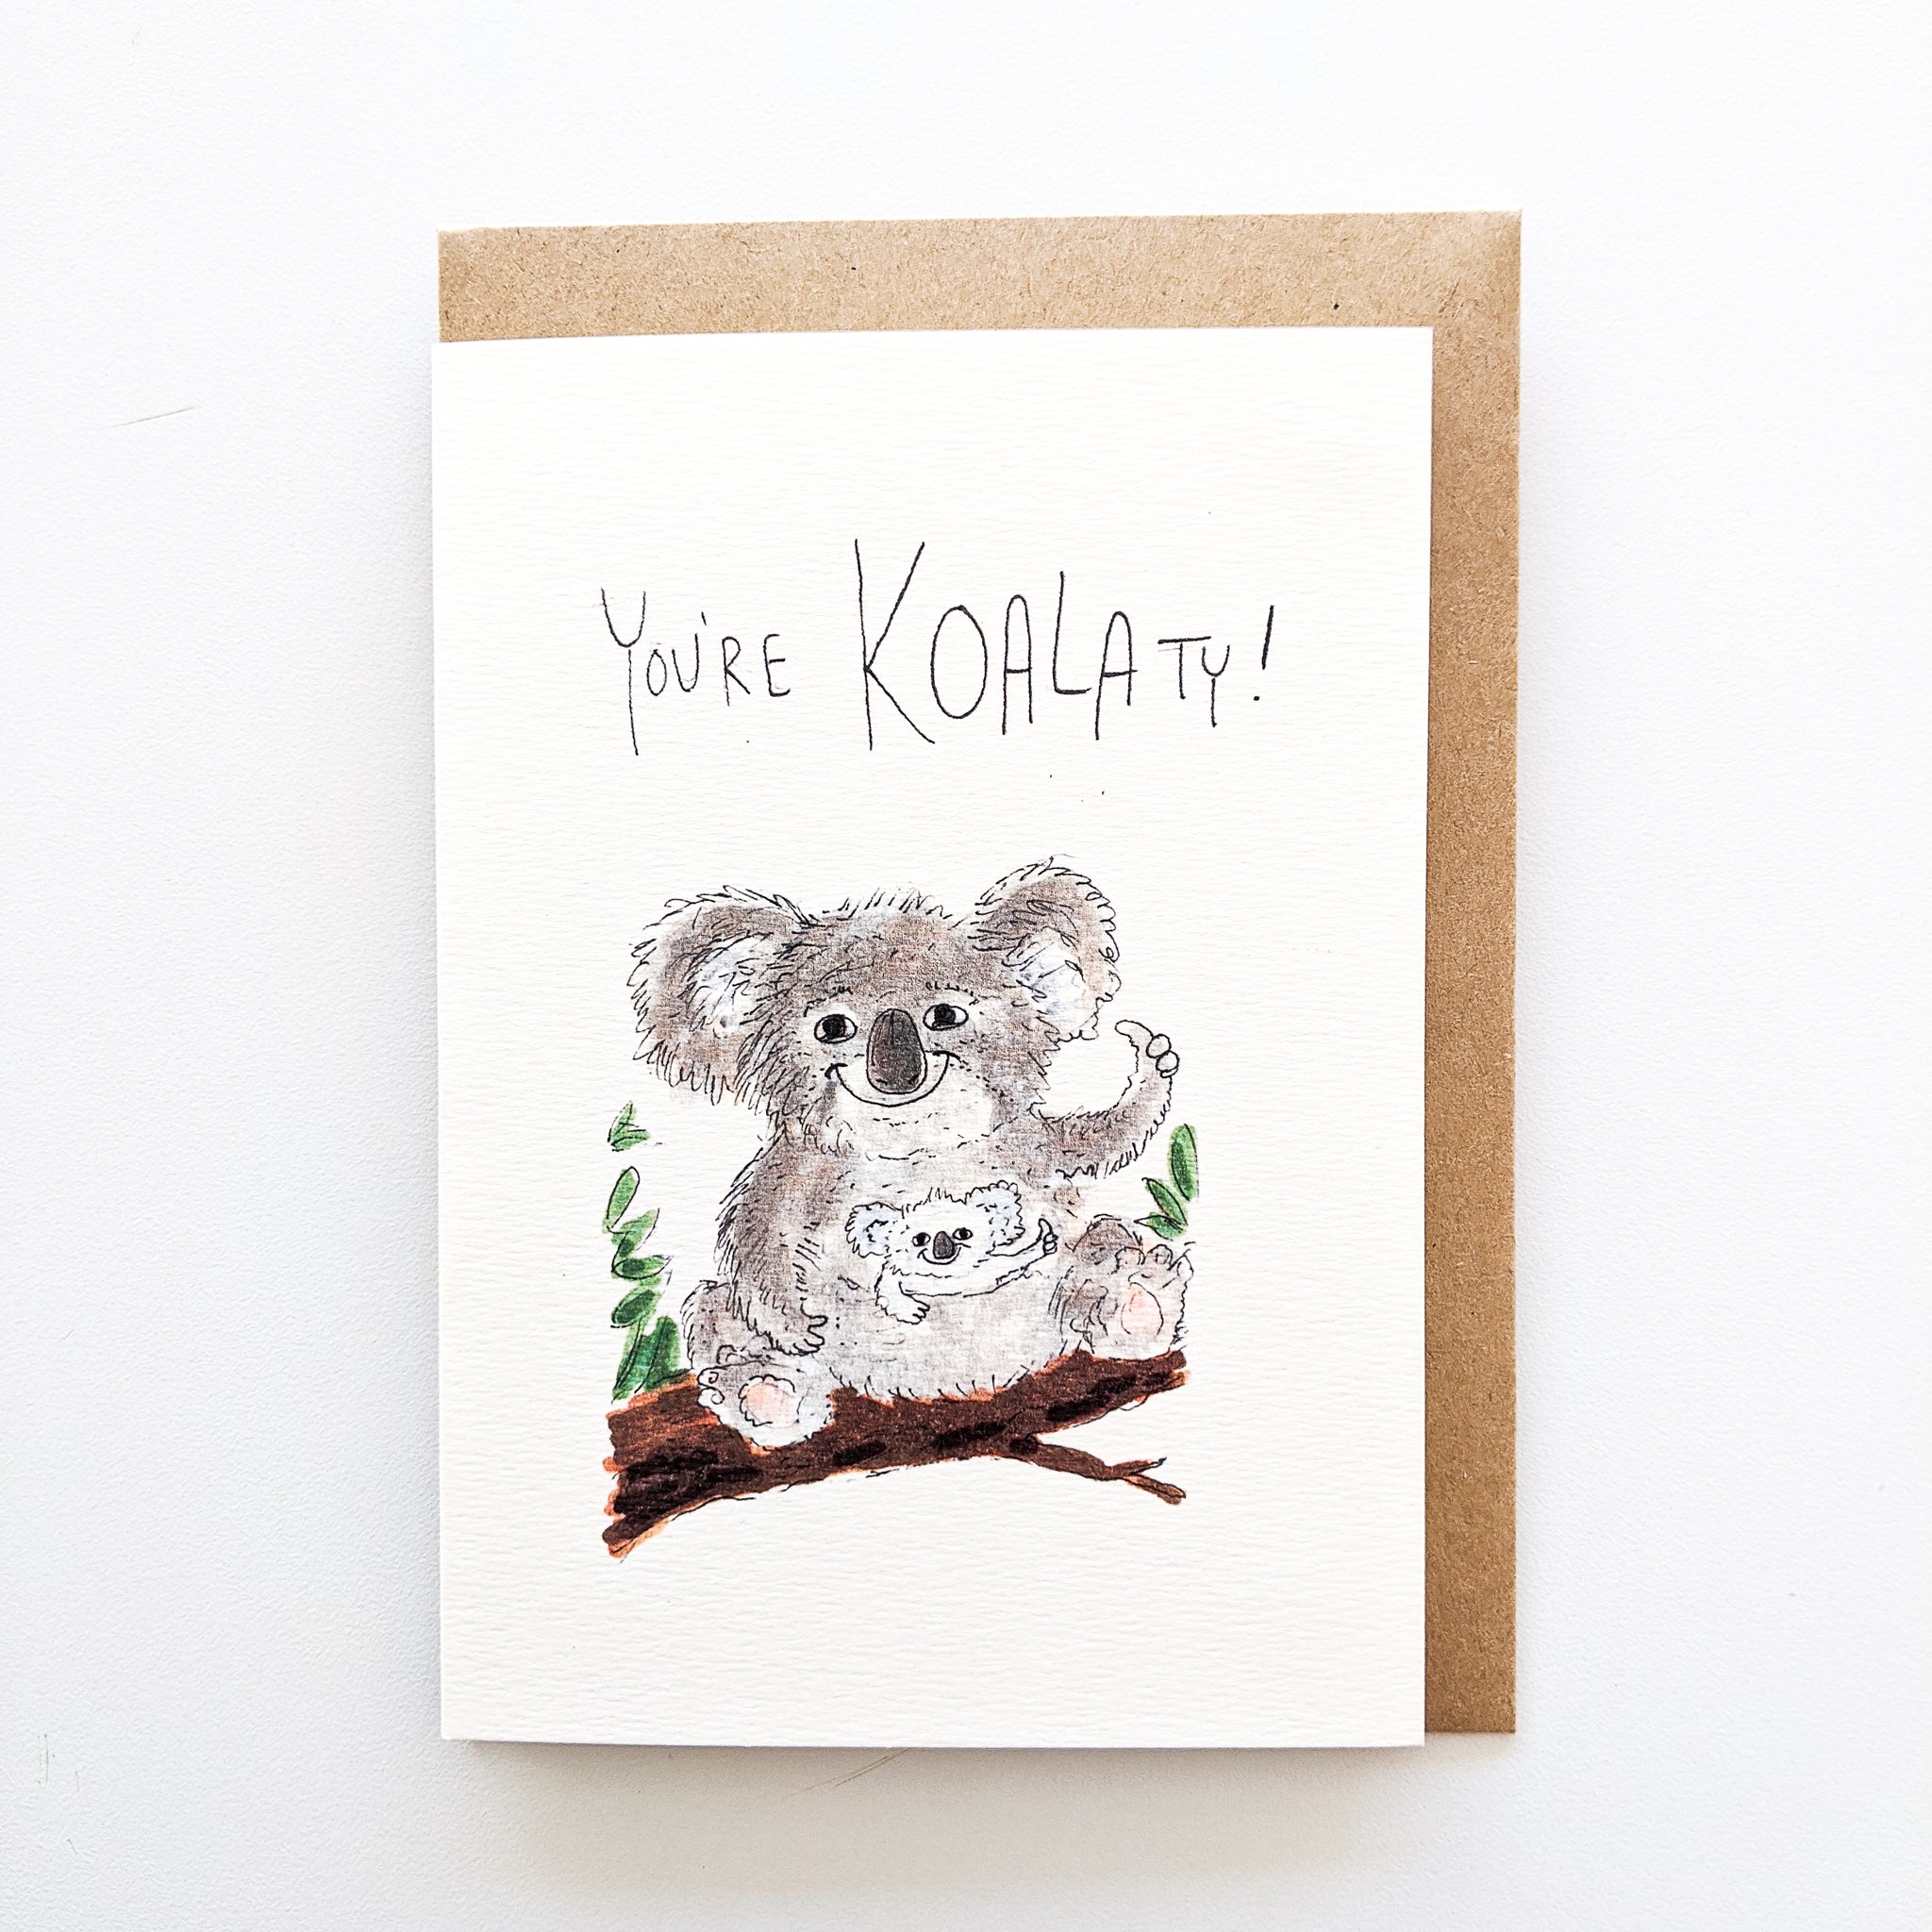 You're Koalaty - Well Drawn